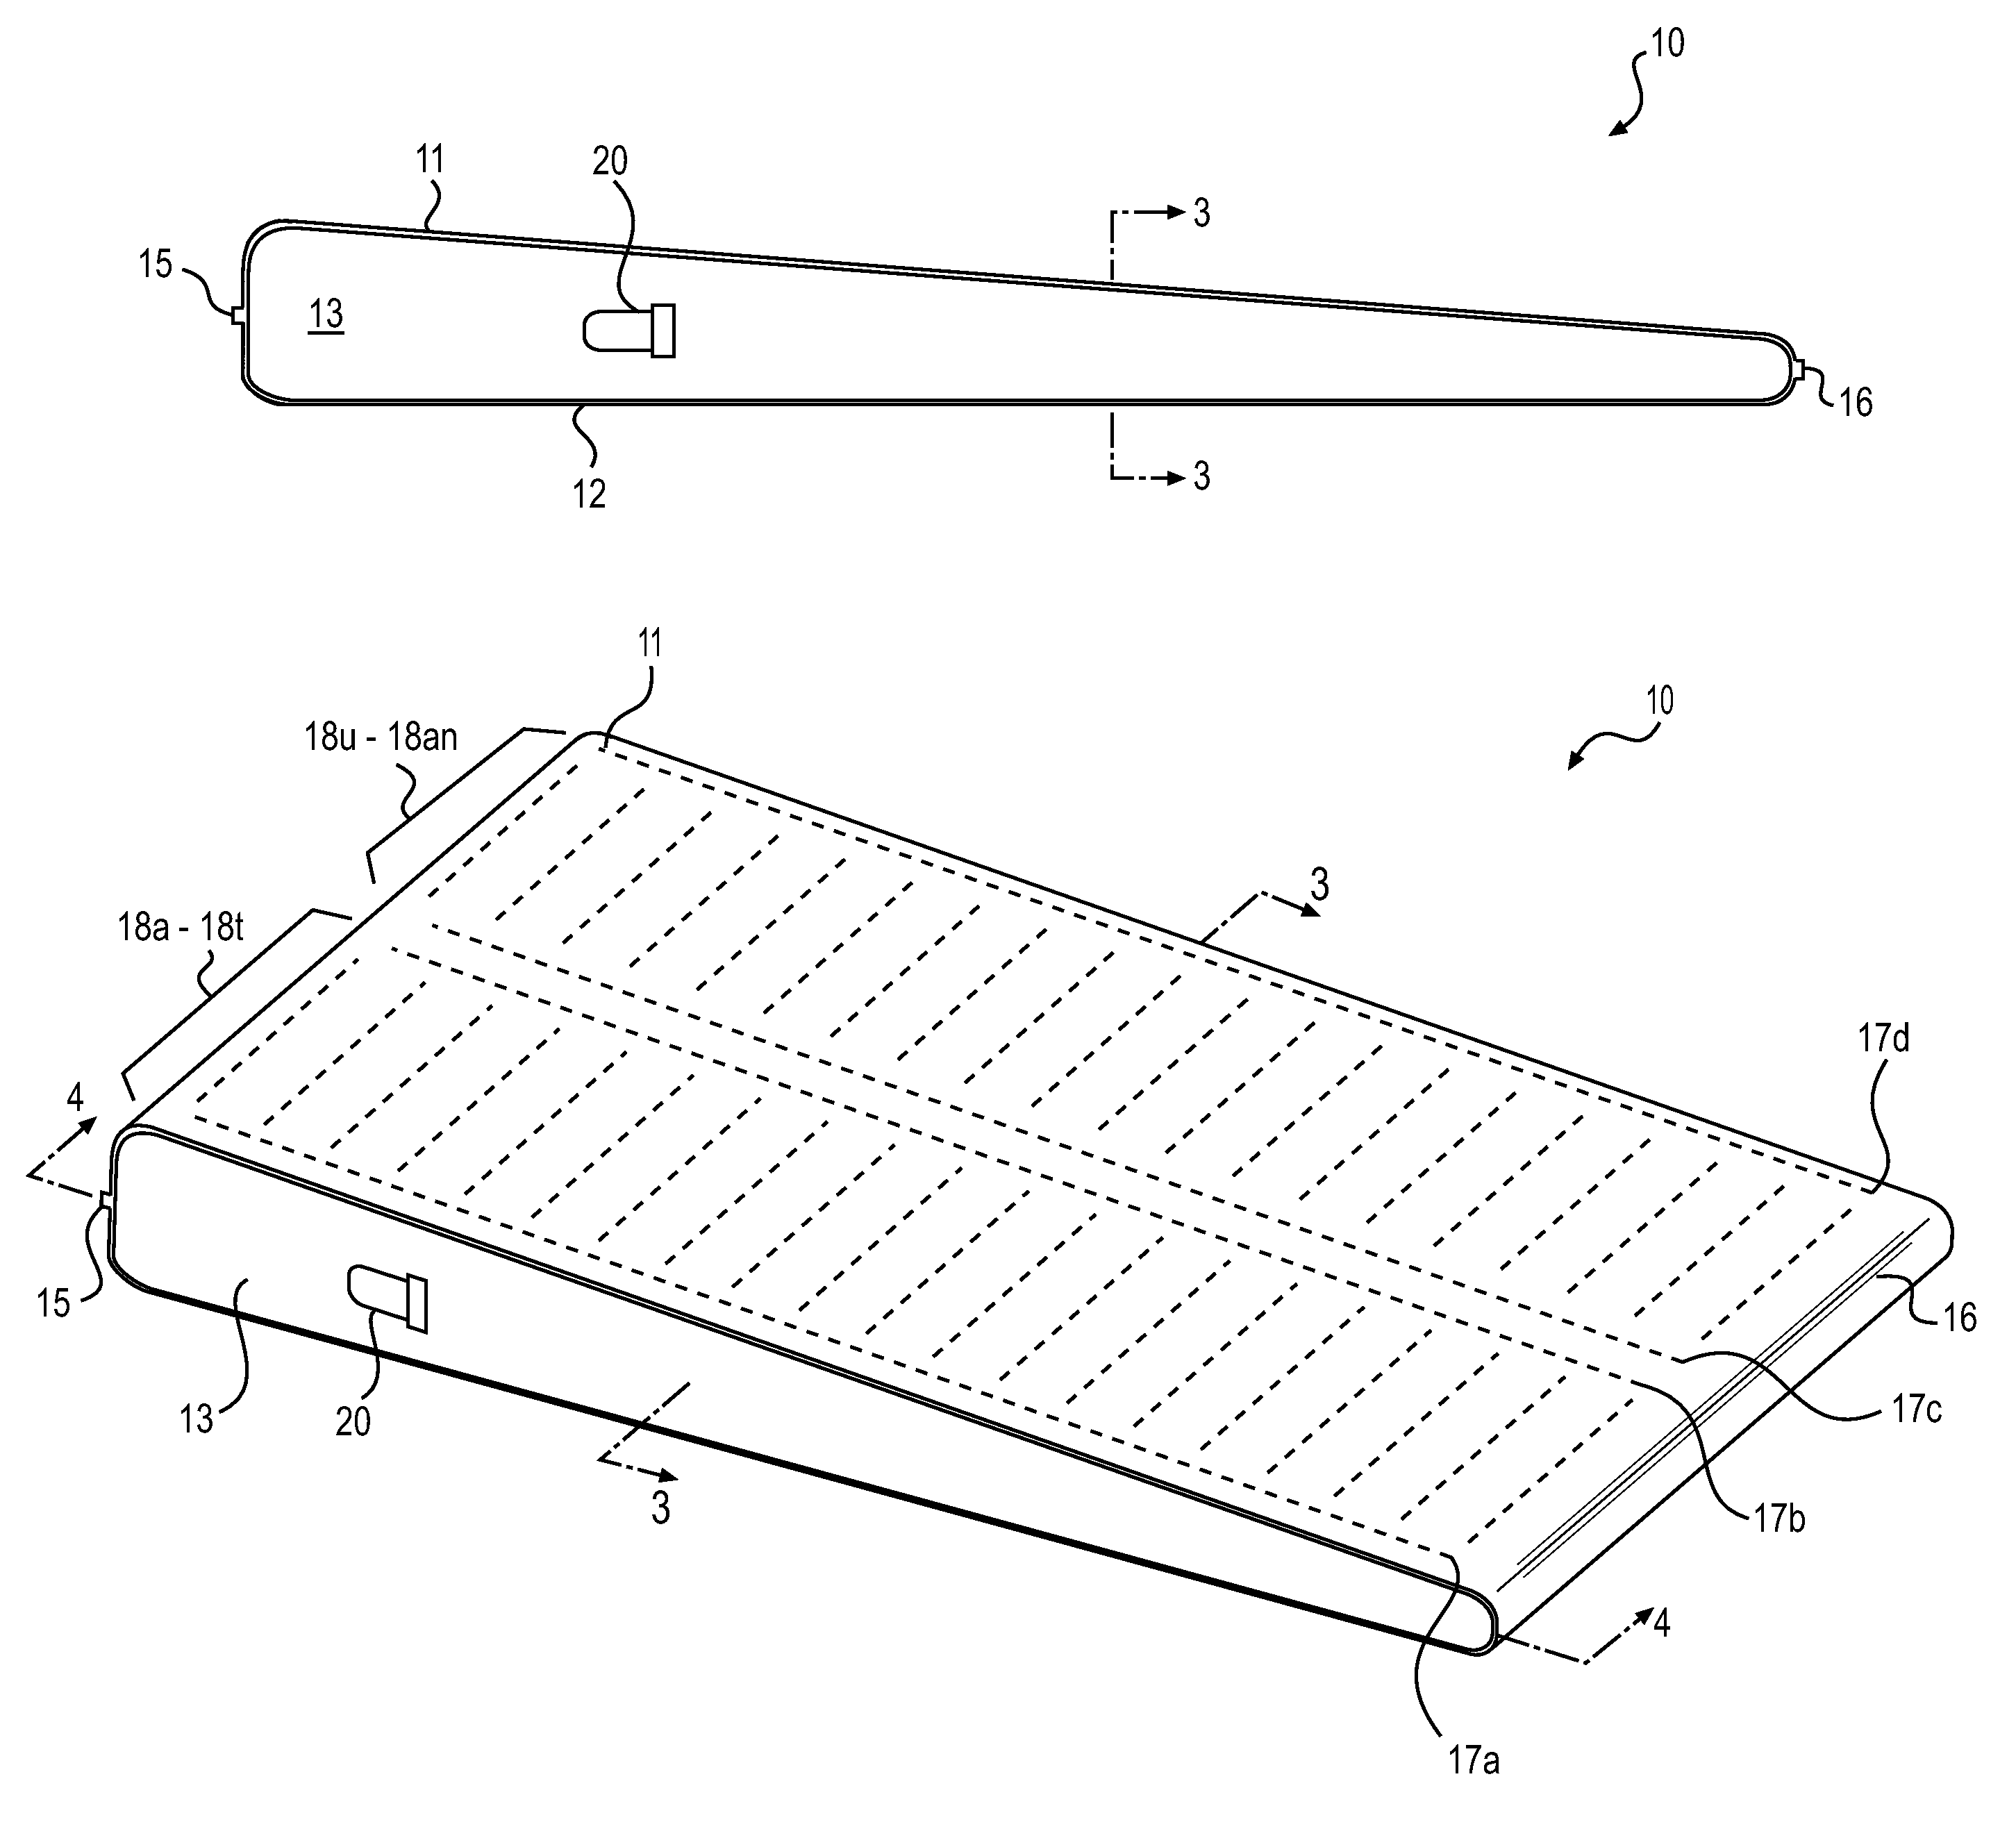 Inclined air mattress having internal air baffles and supports